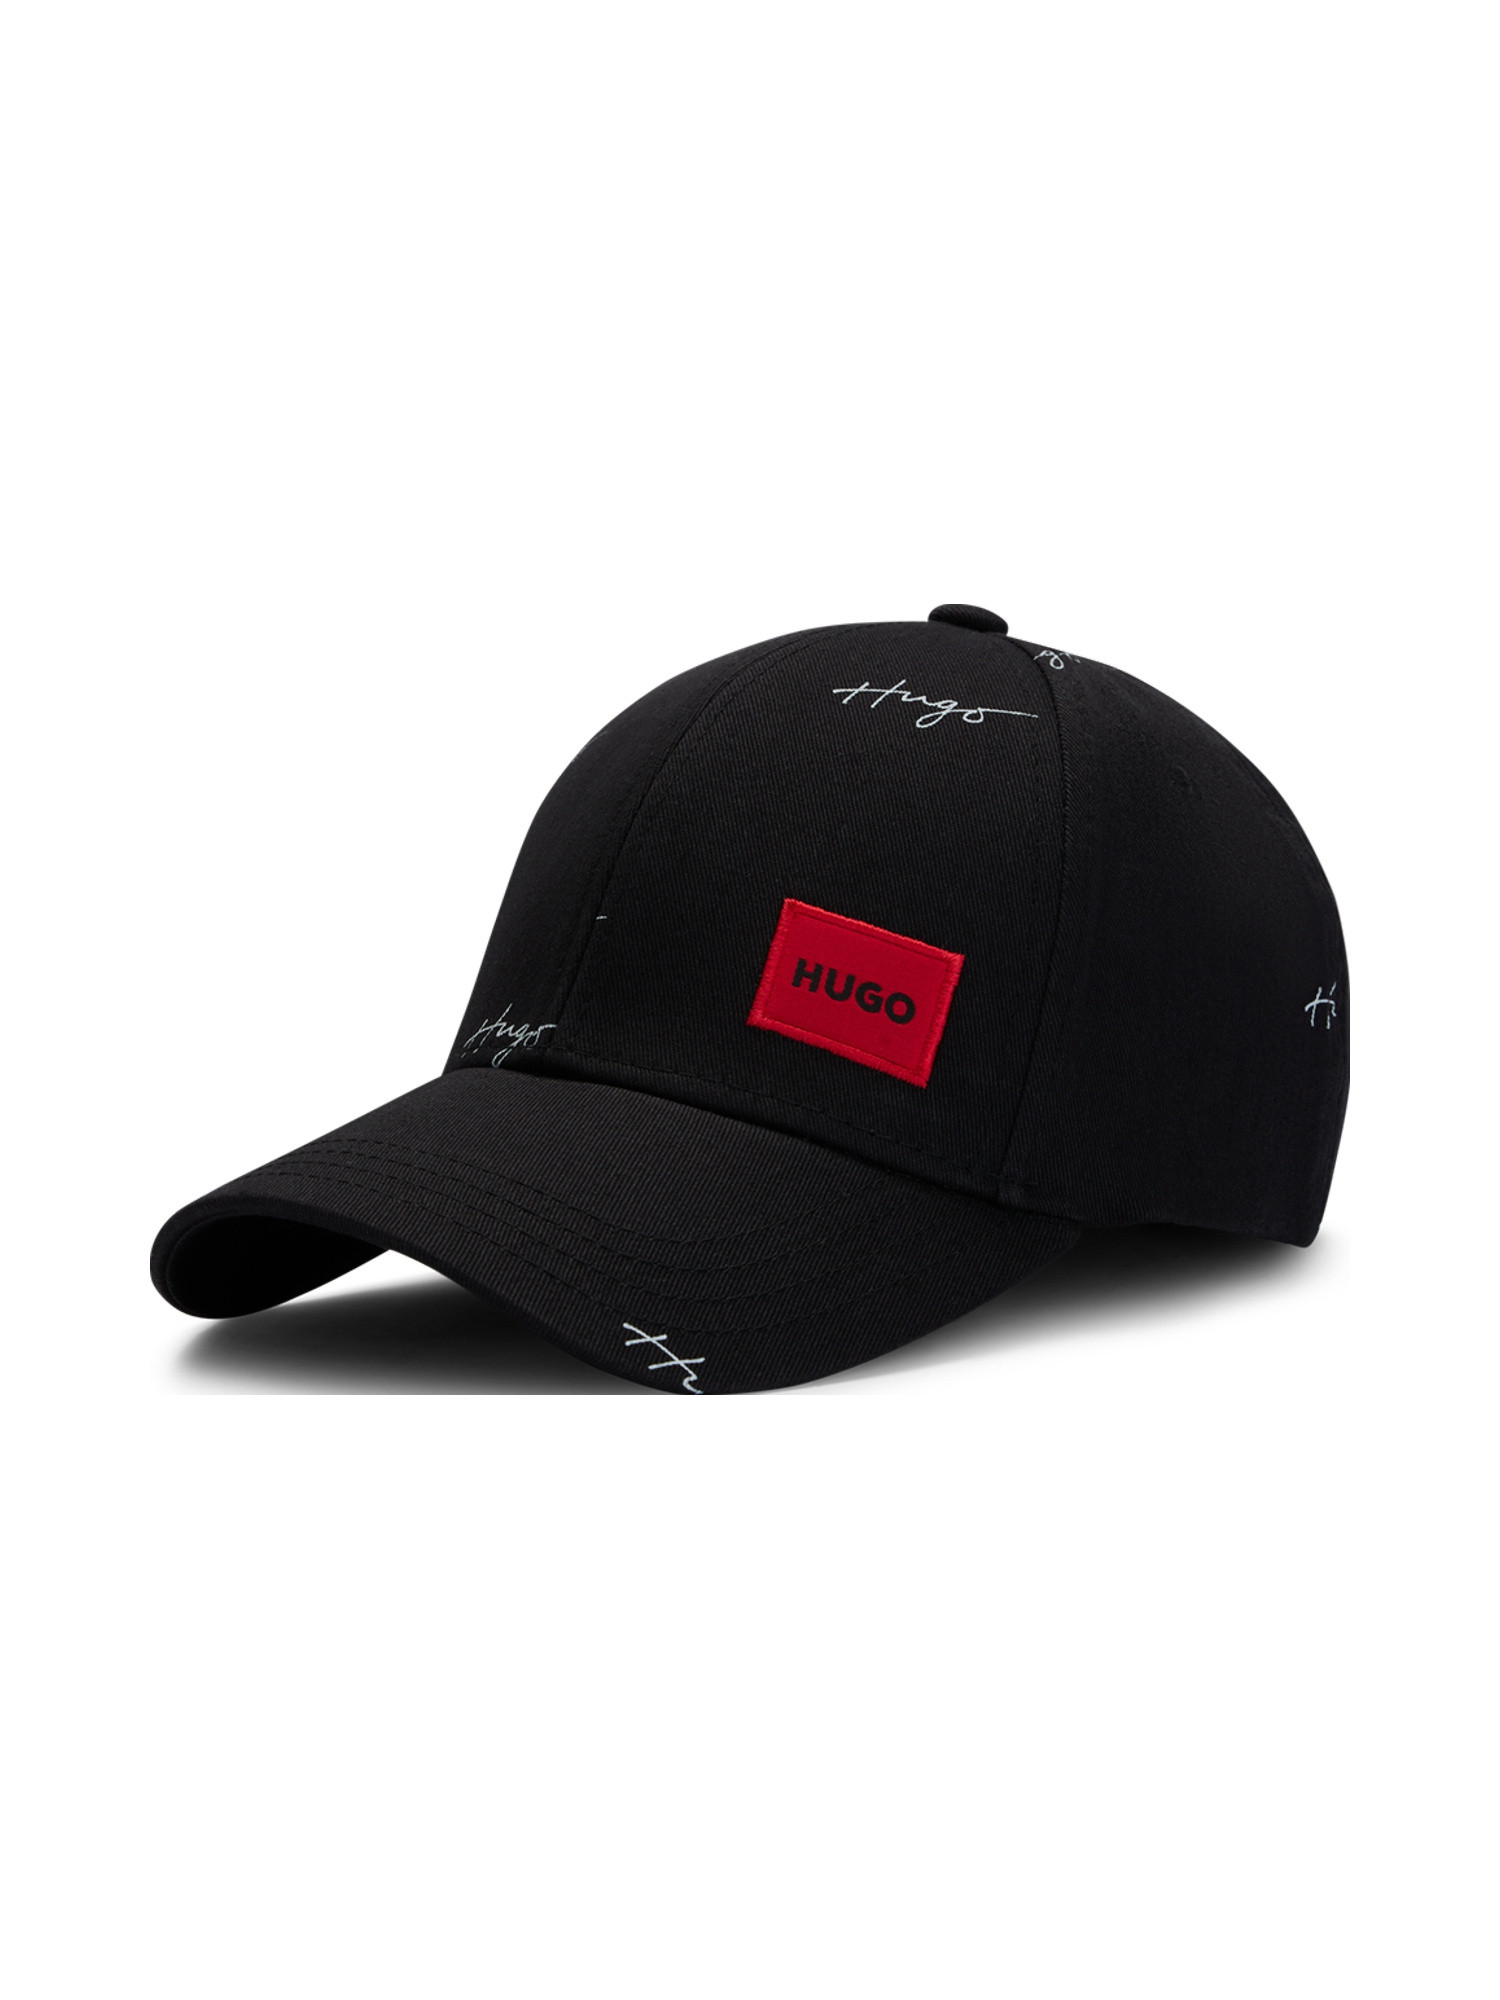 Hugo - Baseball cap with all over logo, Black, large image number 0